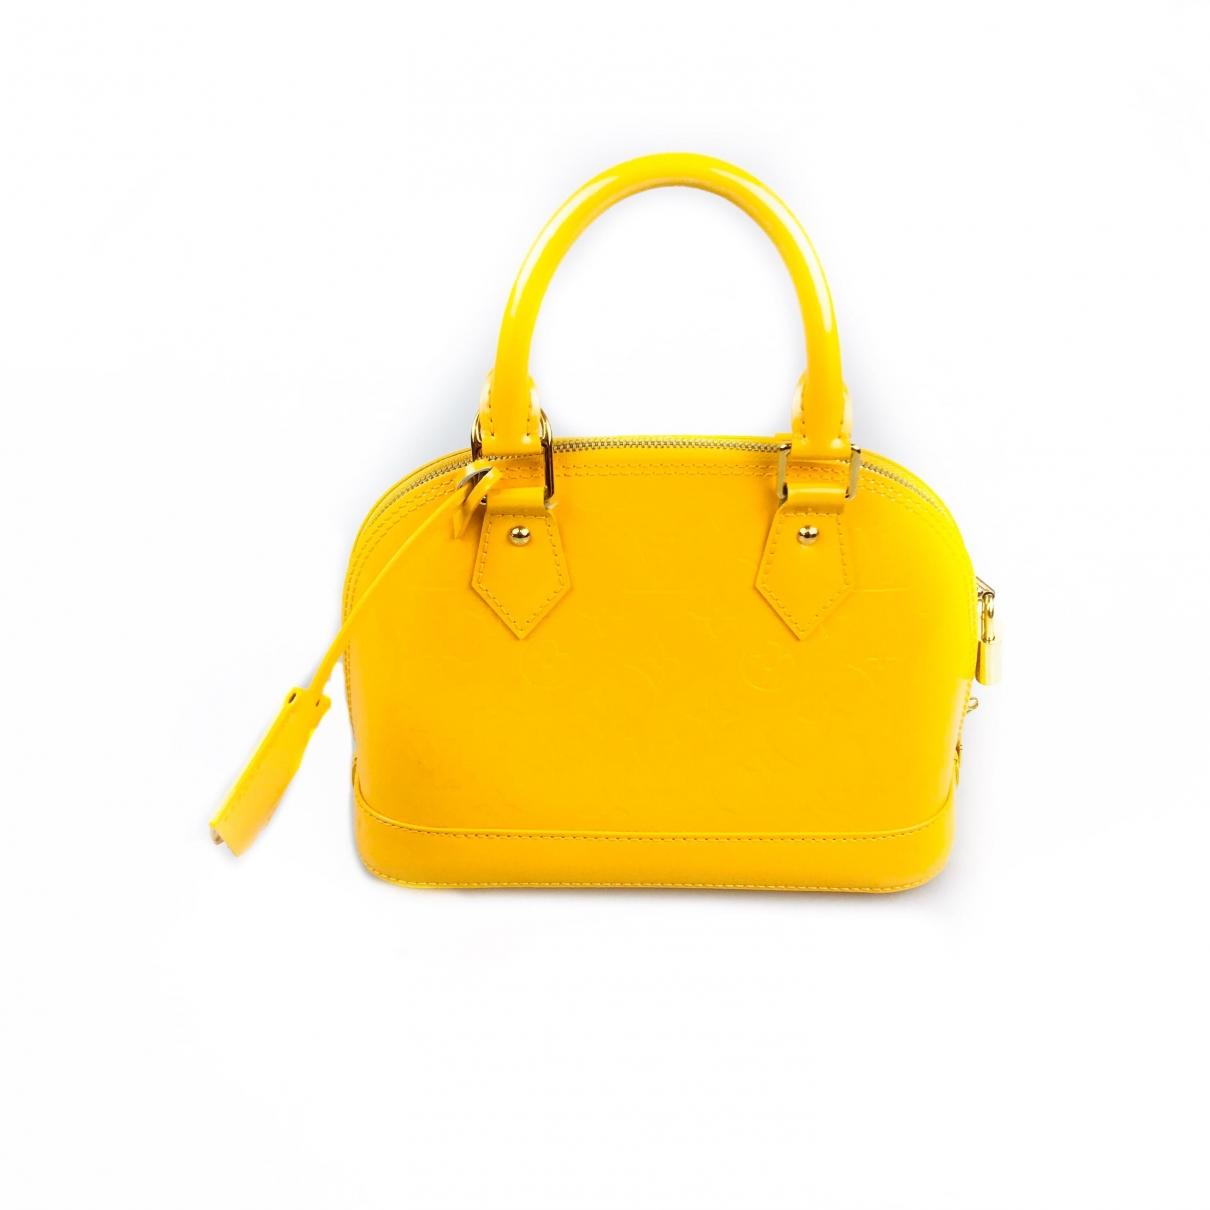 Lyst - Louis Vuitton Alma Yellow Patent Leather Handbag in Yellow